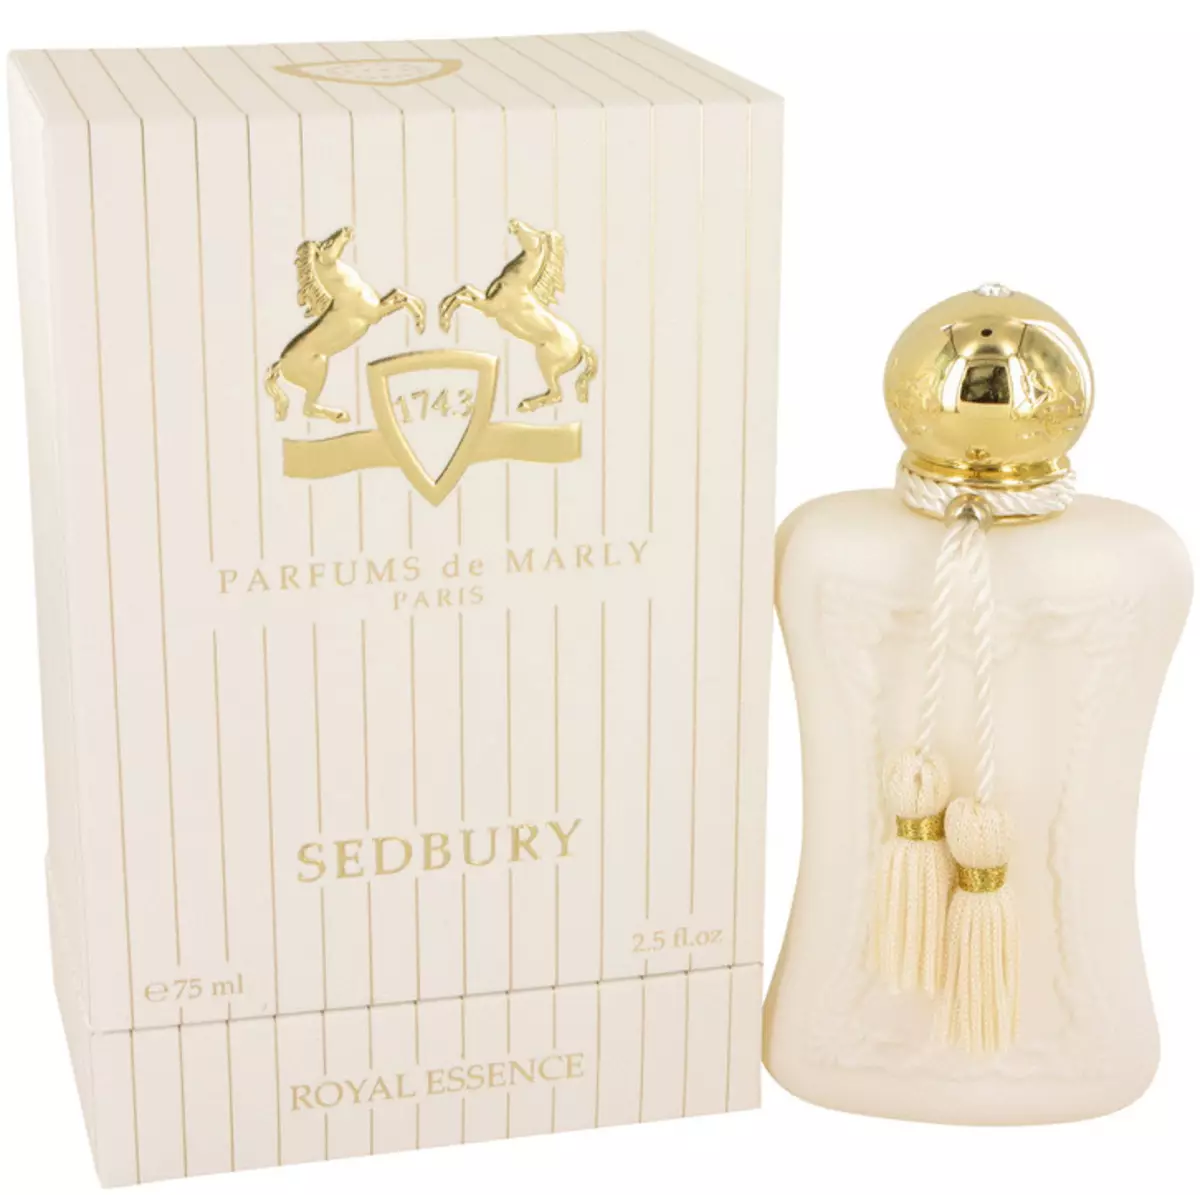 Parfums de marly perfumes: டெலினா, meloiora மற்றும் layton, erood மற்றும் darley, cassili மற்றும் பிற ஆவிகள், தேர்வு அளவுகோல், விமர்சனங்களை 25169_38